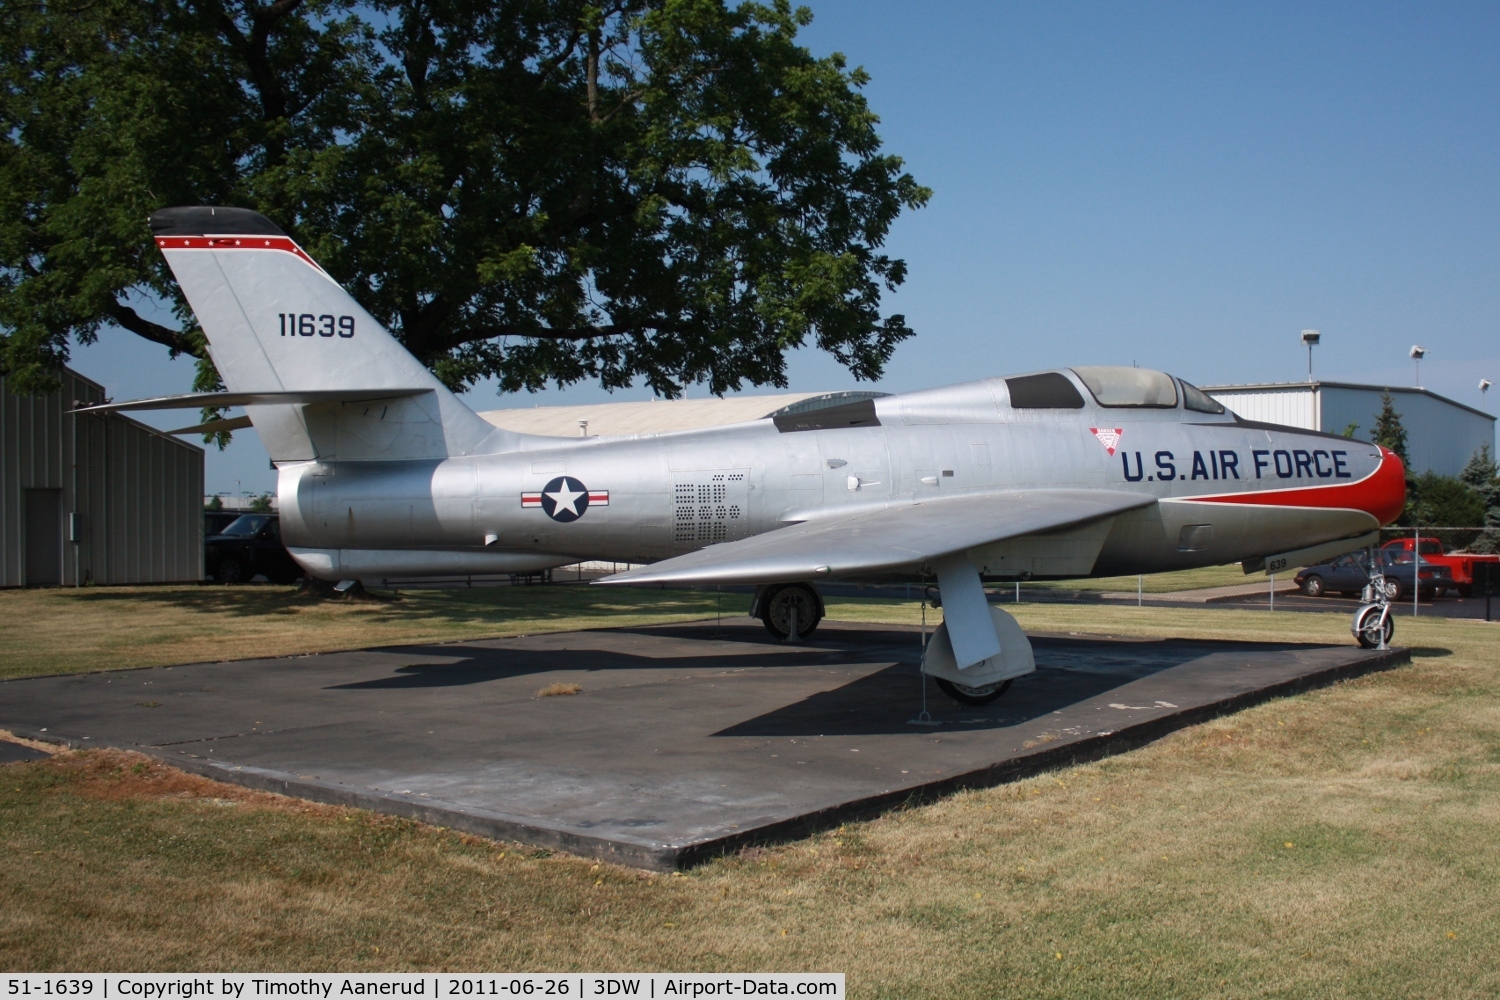 51-1639, 1954 Republic F-84F Thunderstreak C/N Not found 51-1639, 1954 Republic F-84F-25-RE, c/n: 51-1639